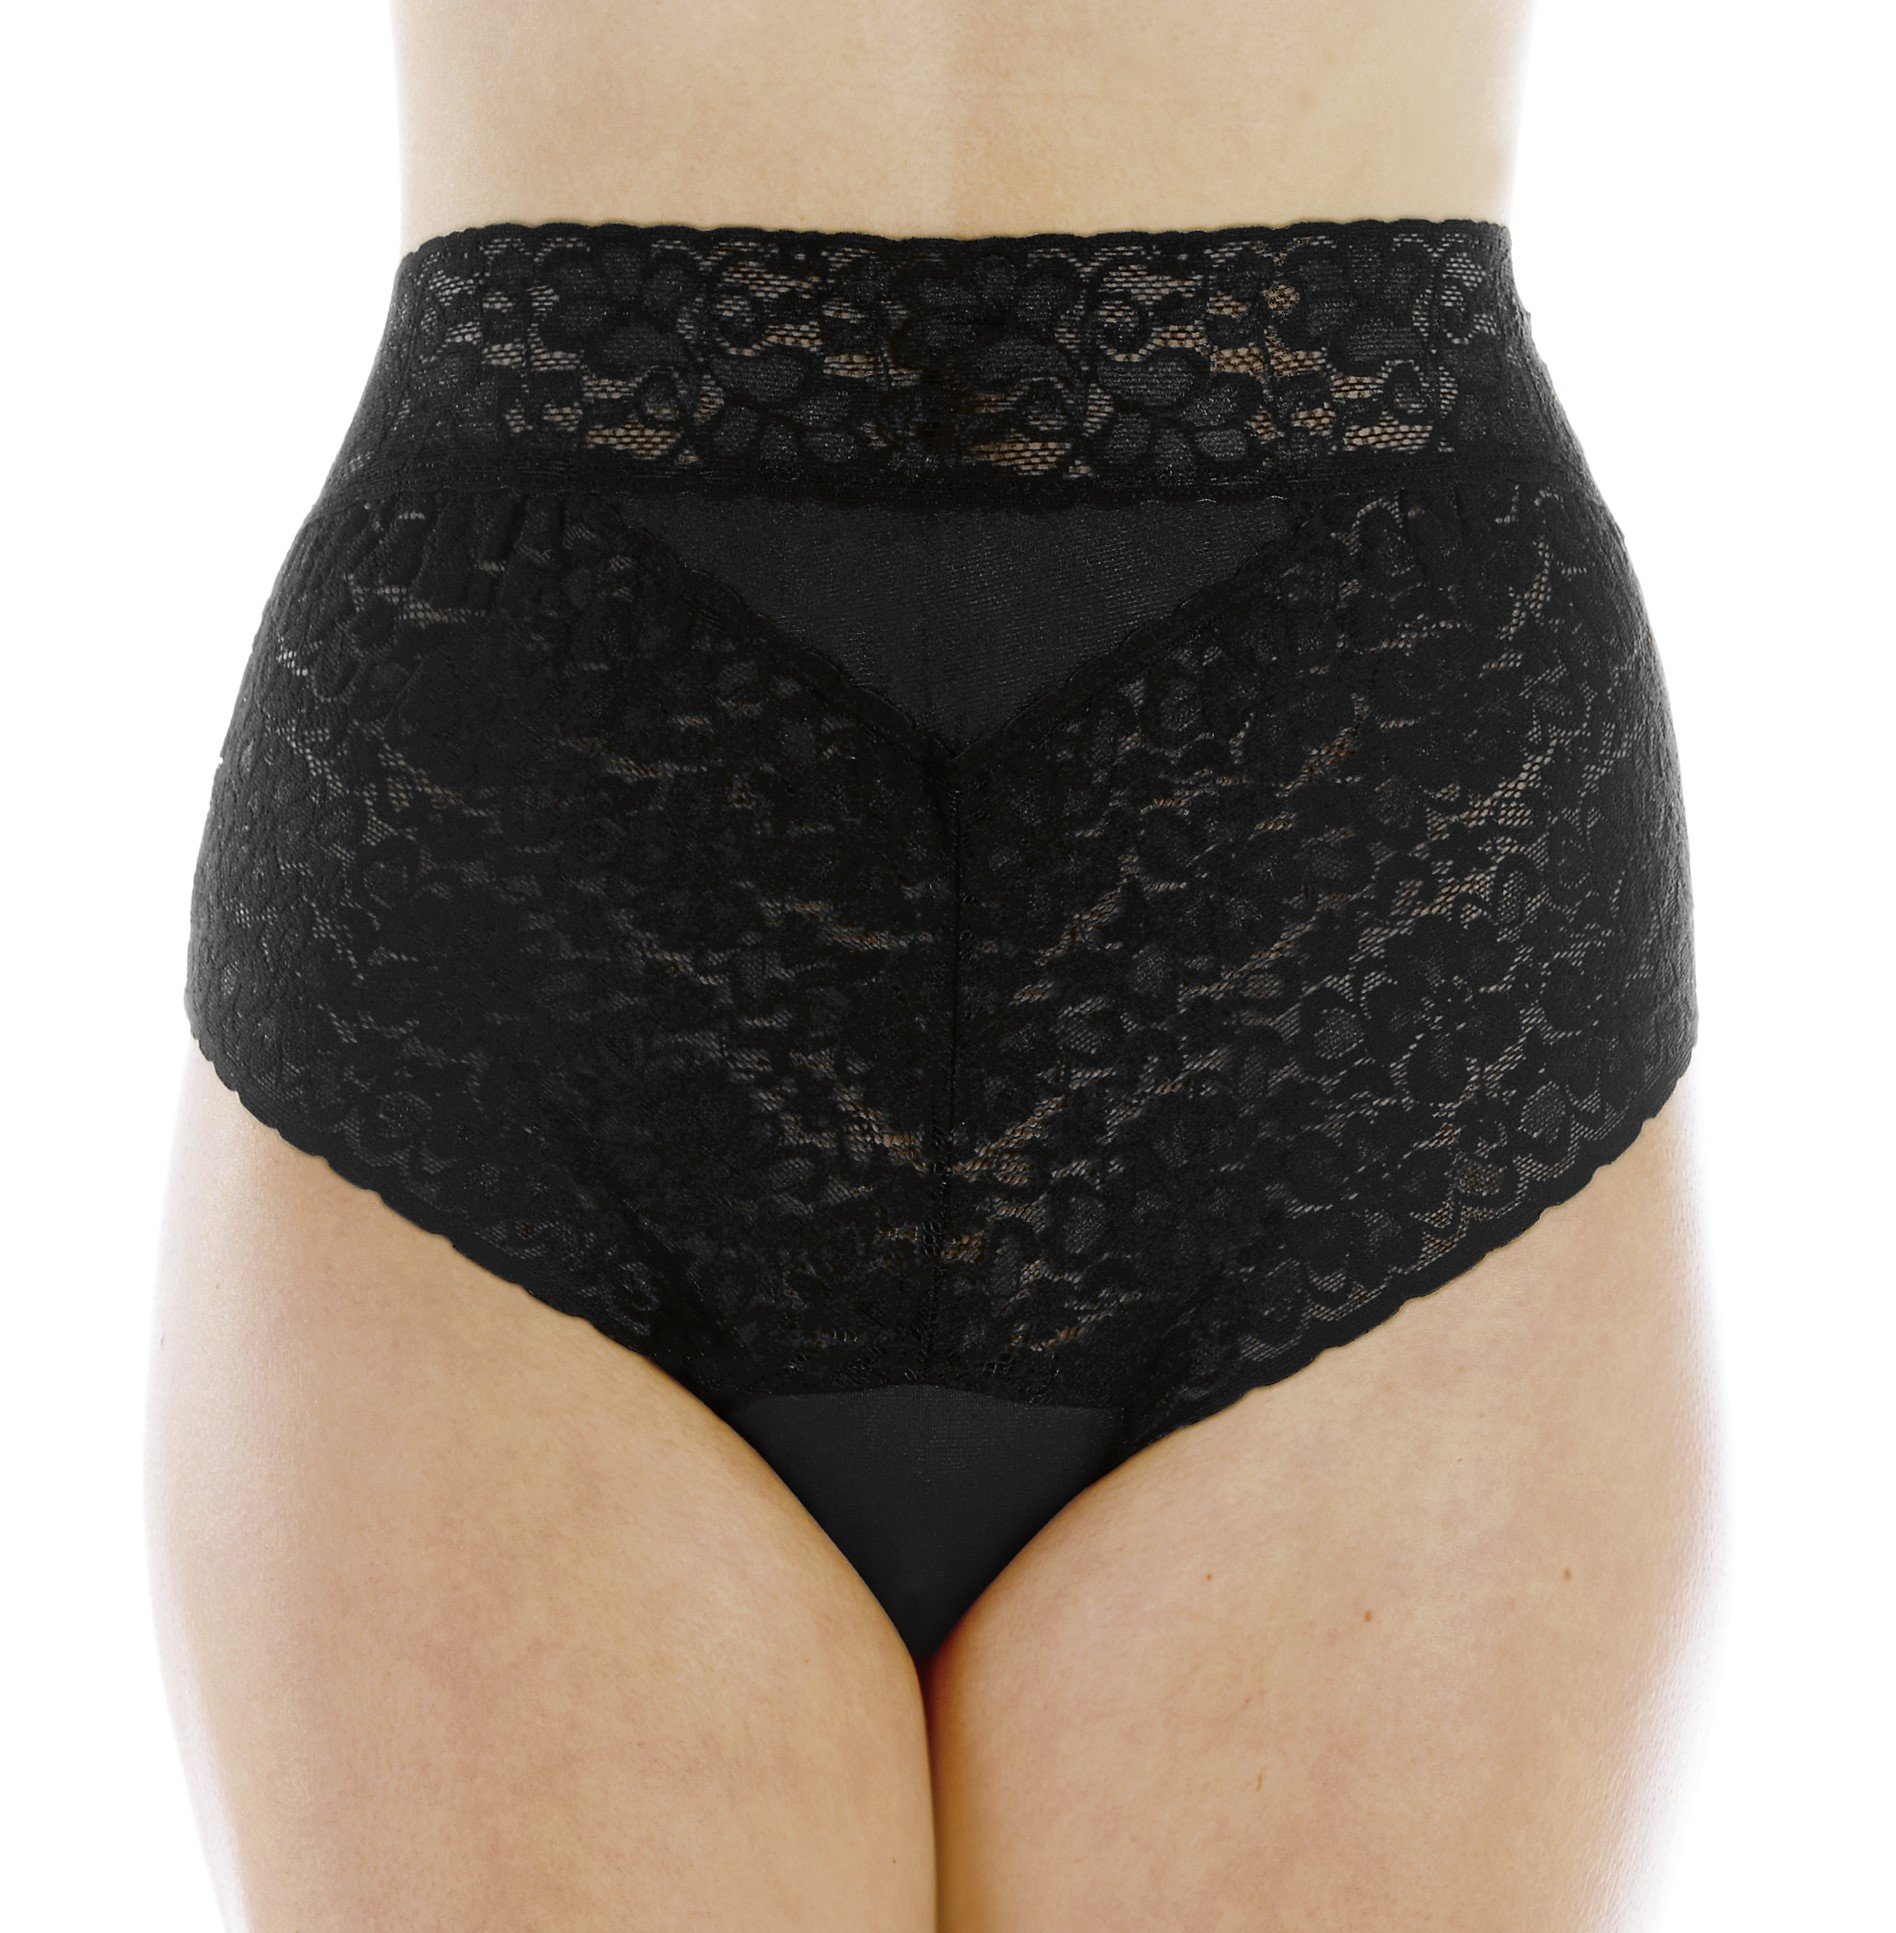 Black Hi-Waist Lace Fullback Panty 59134 - Karnation Intimate Apparel Inc.